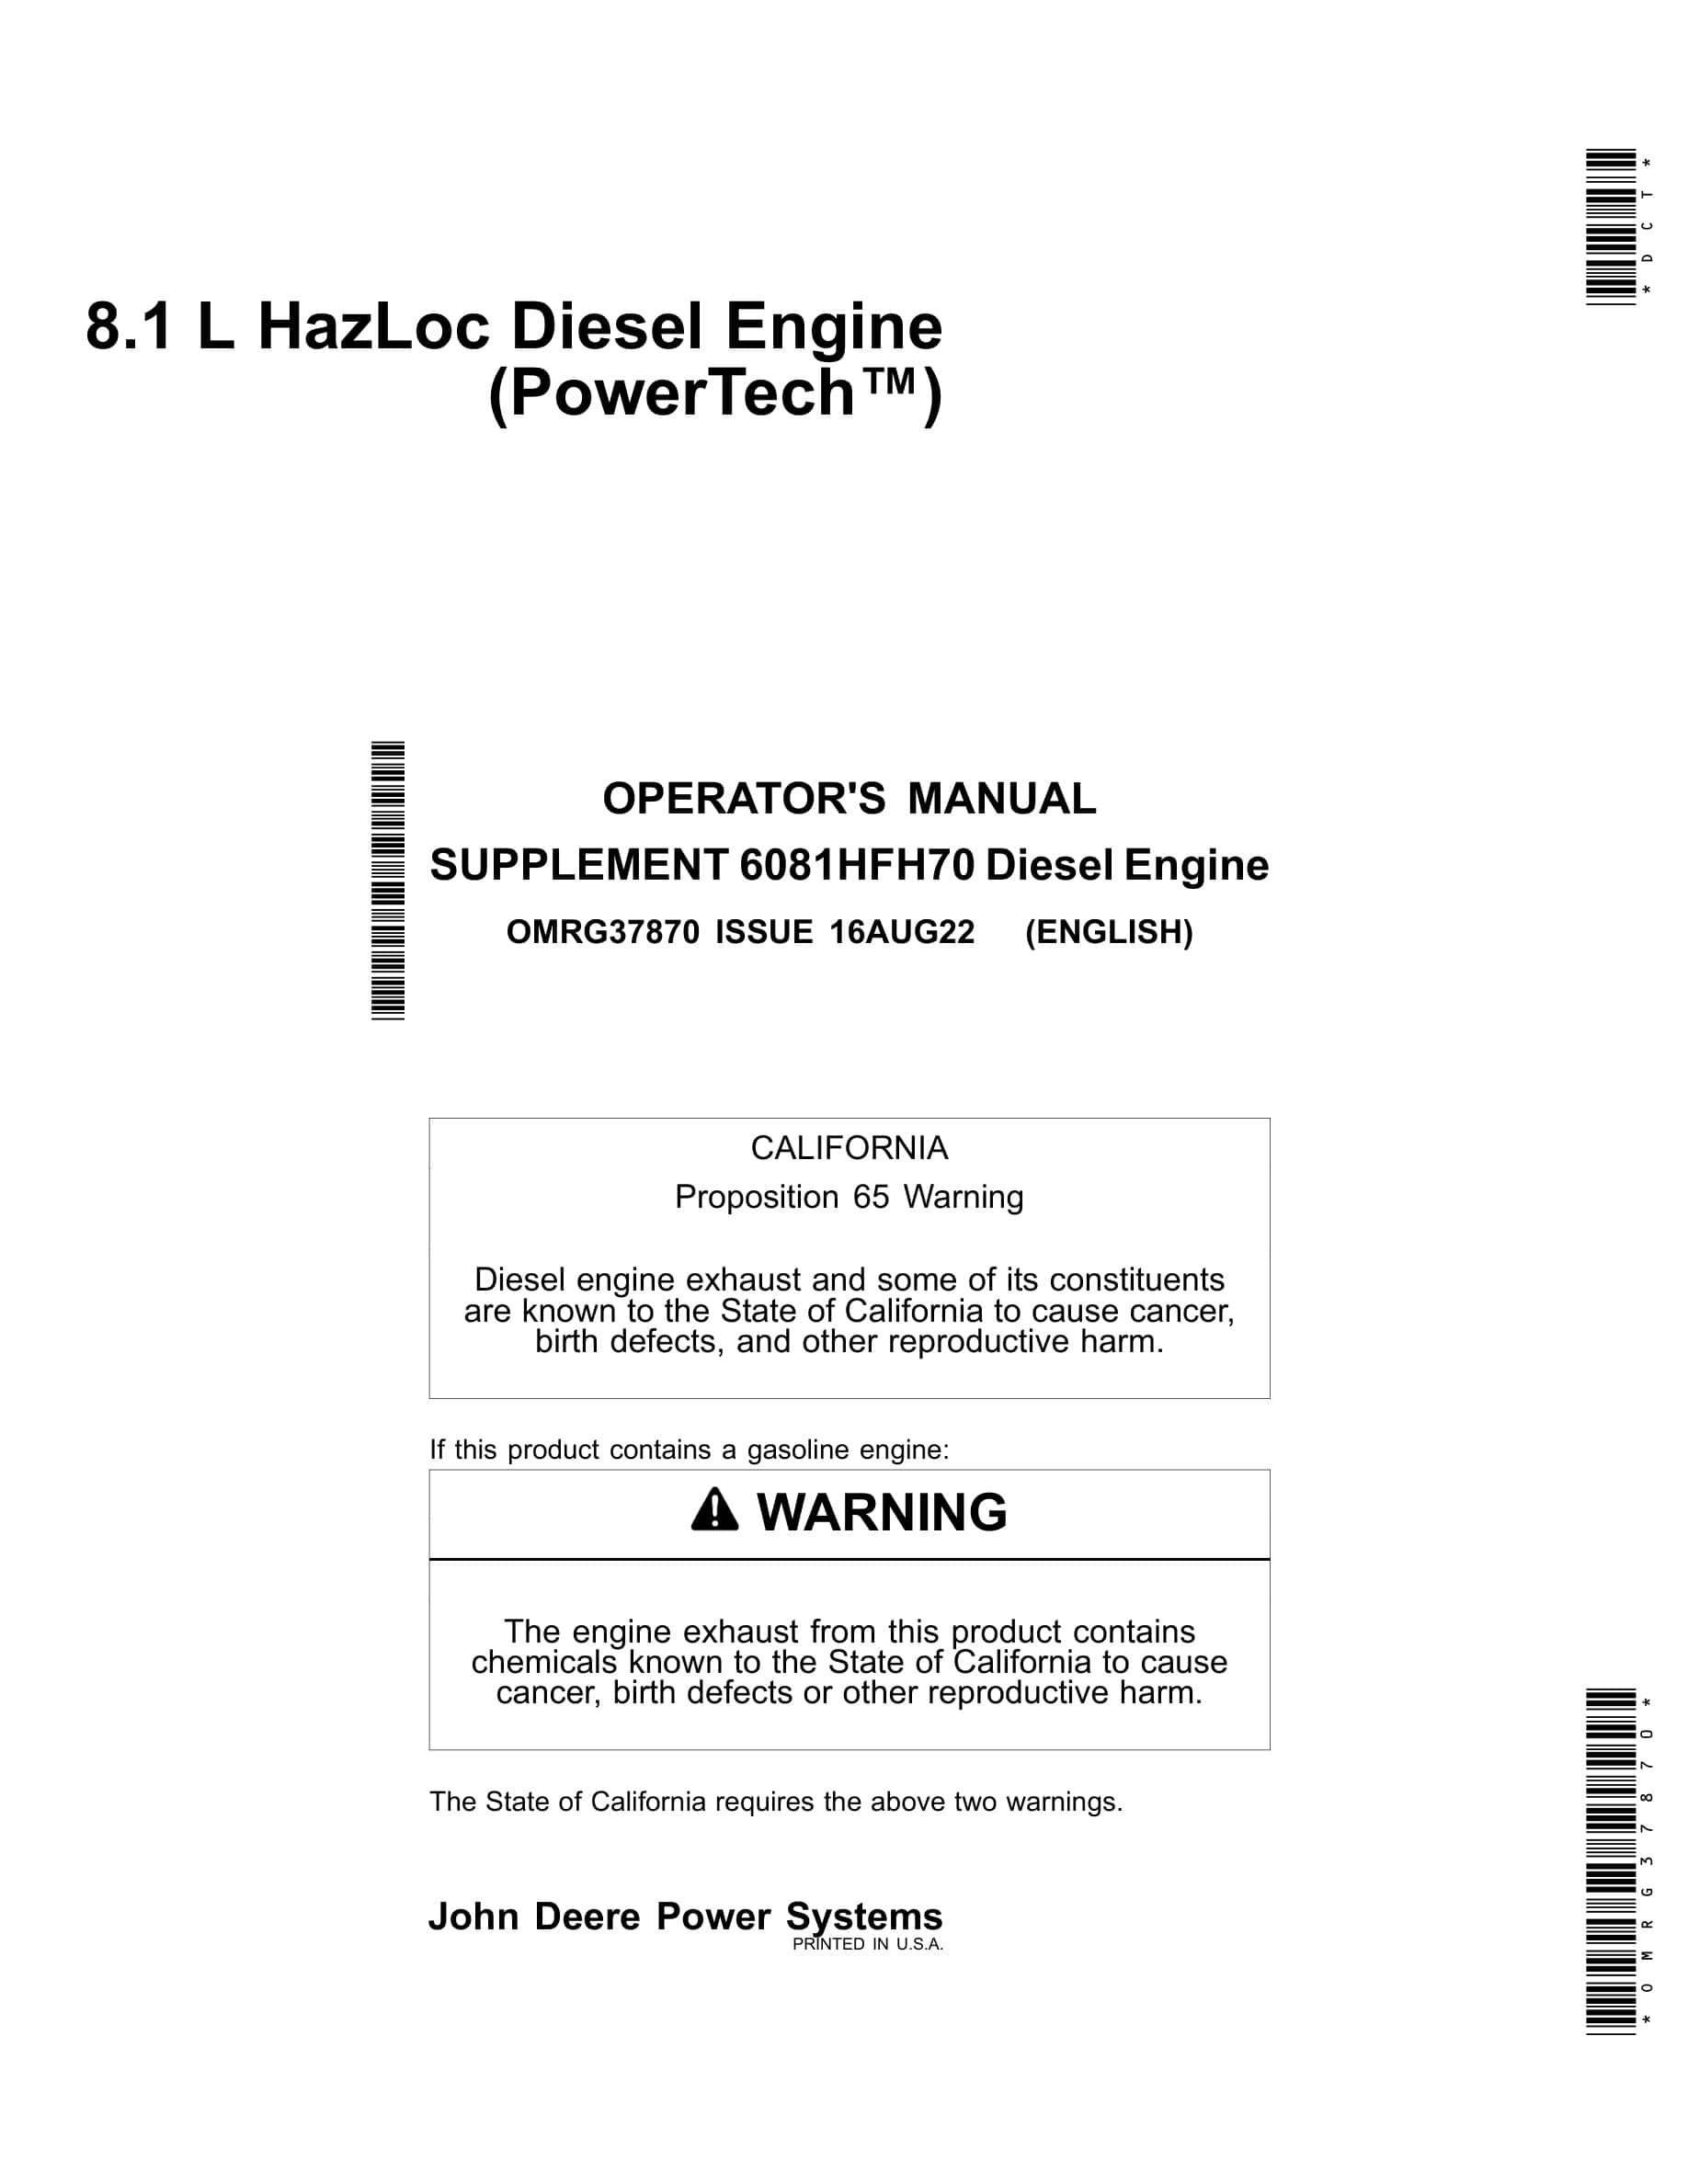 John Deere PowerTech 8.1 L SUPPLEMENT 6081HFH70 Marine HazLoc Diesel Engine Operator Manual OMRG37870-1